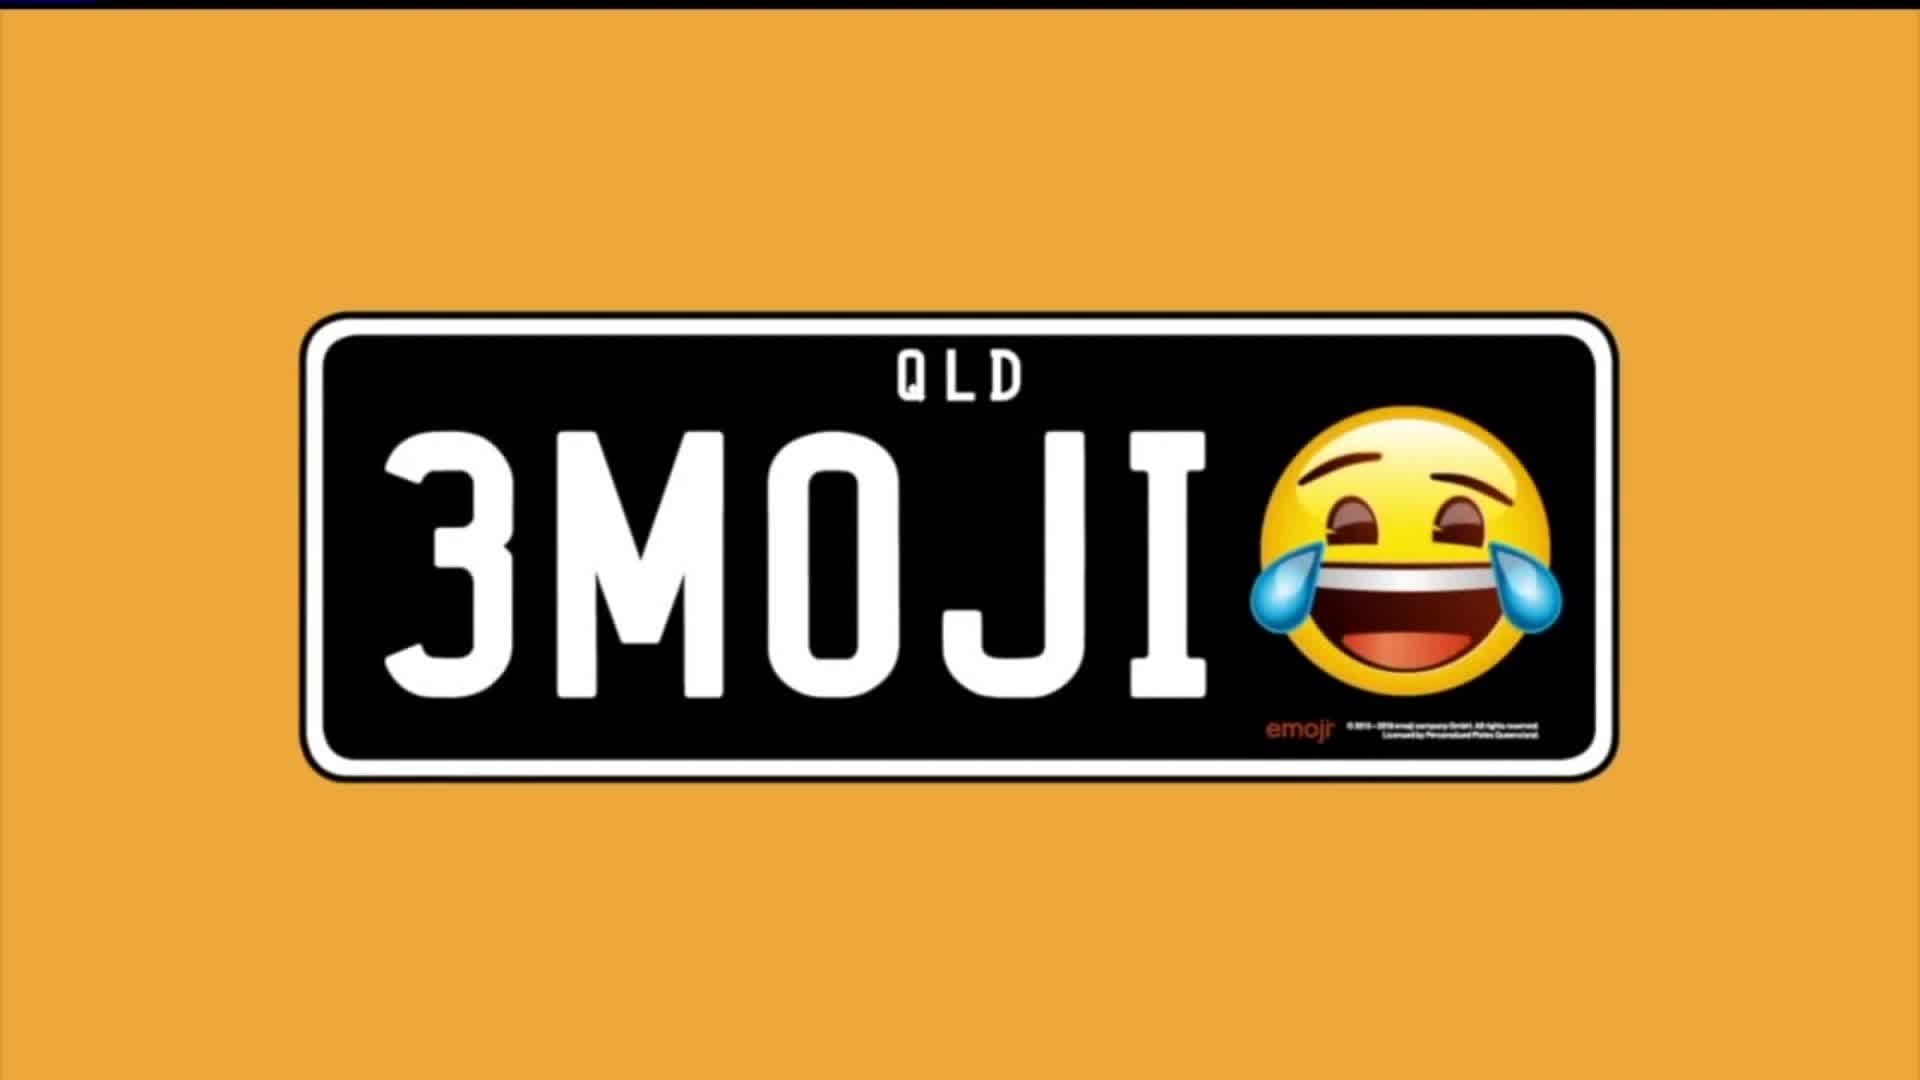 Australia using emojis in license plates